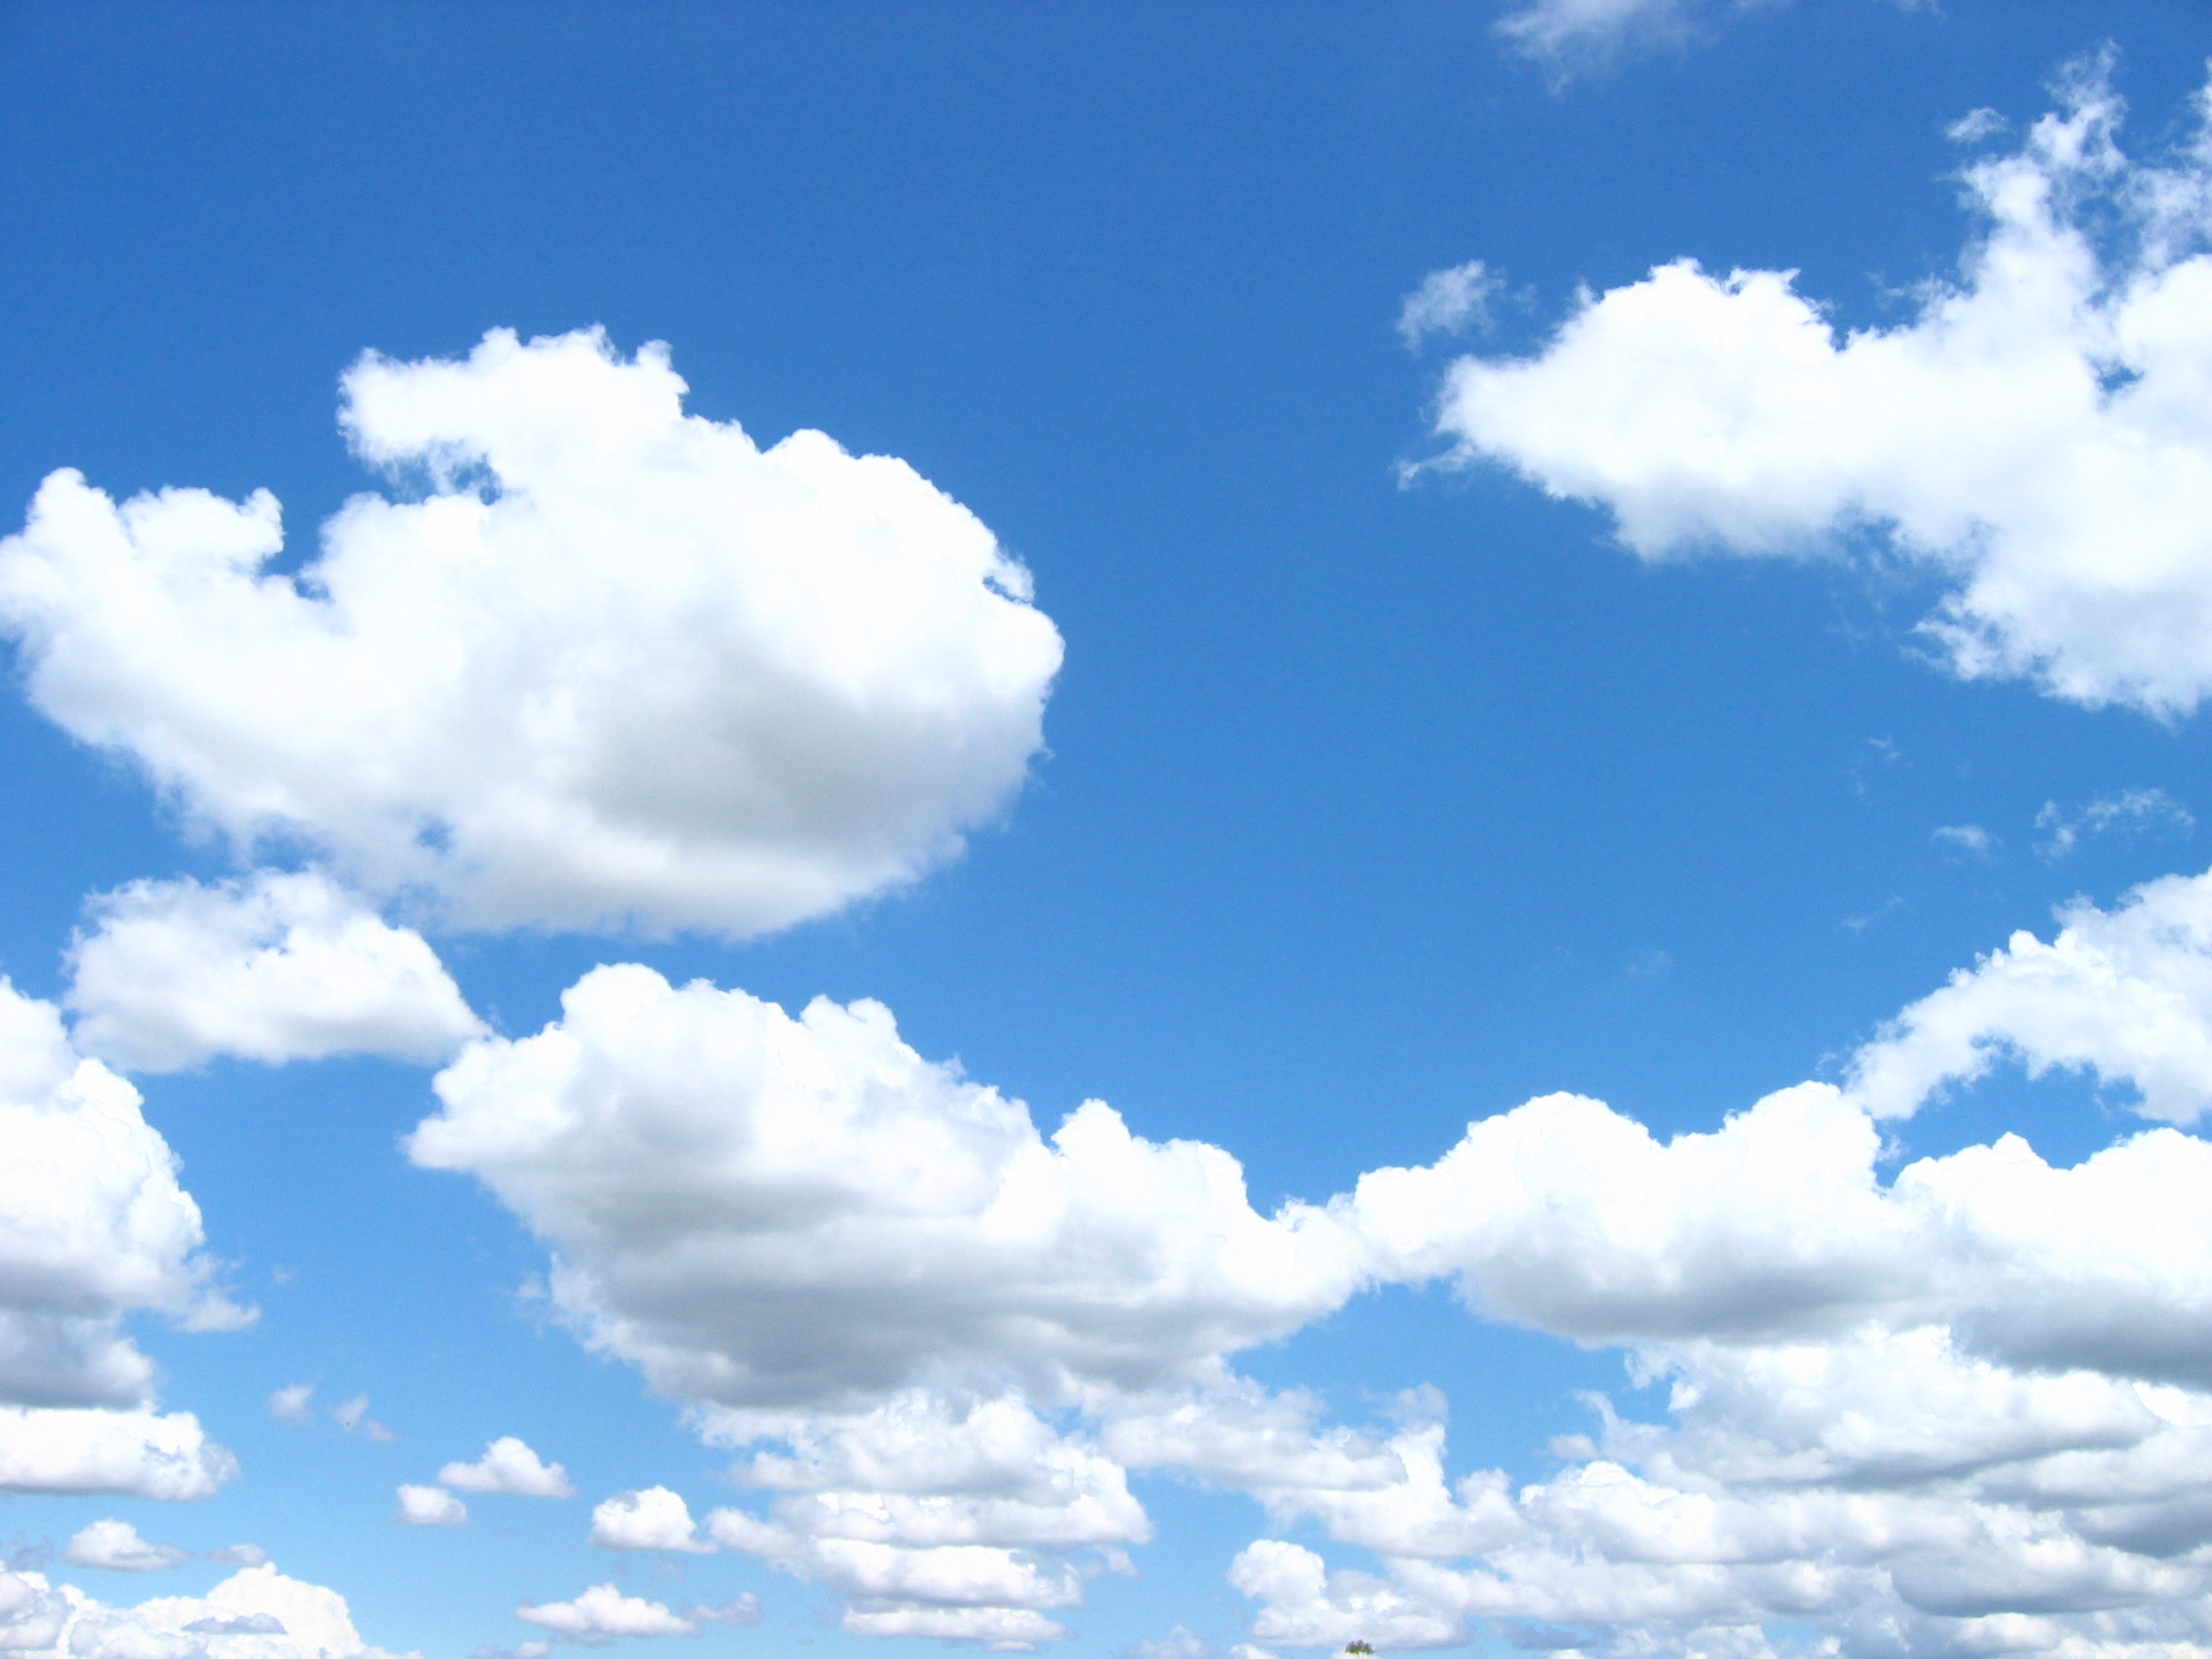 SCMSP Expands Cloud Computing Capabilities Meeting Market Demands